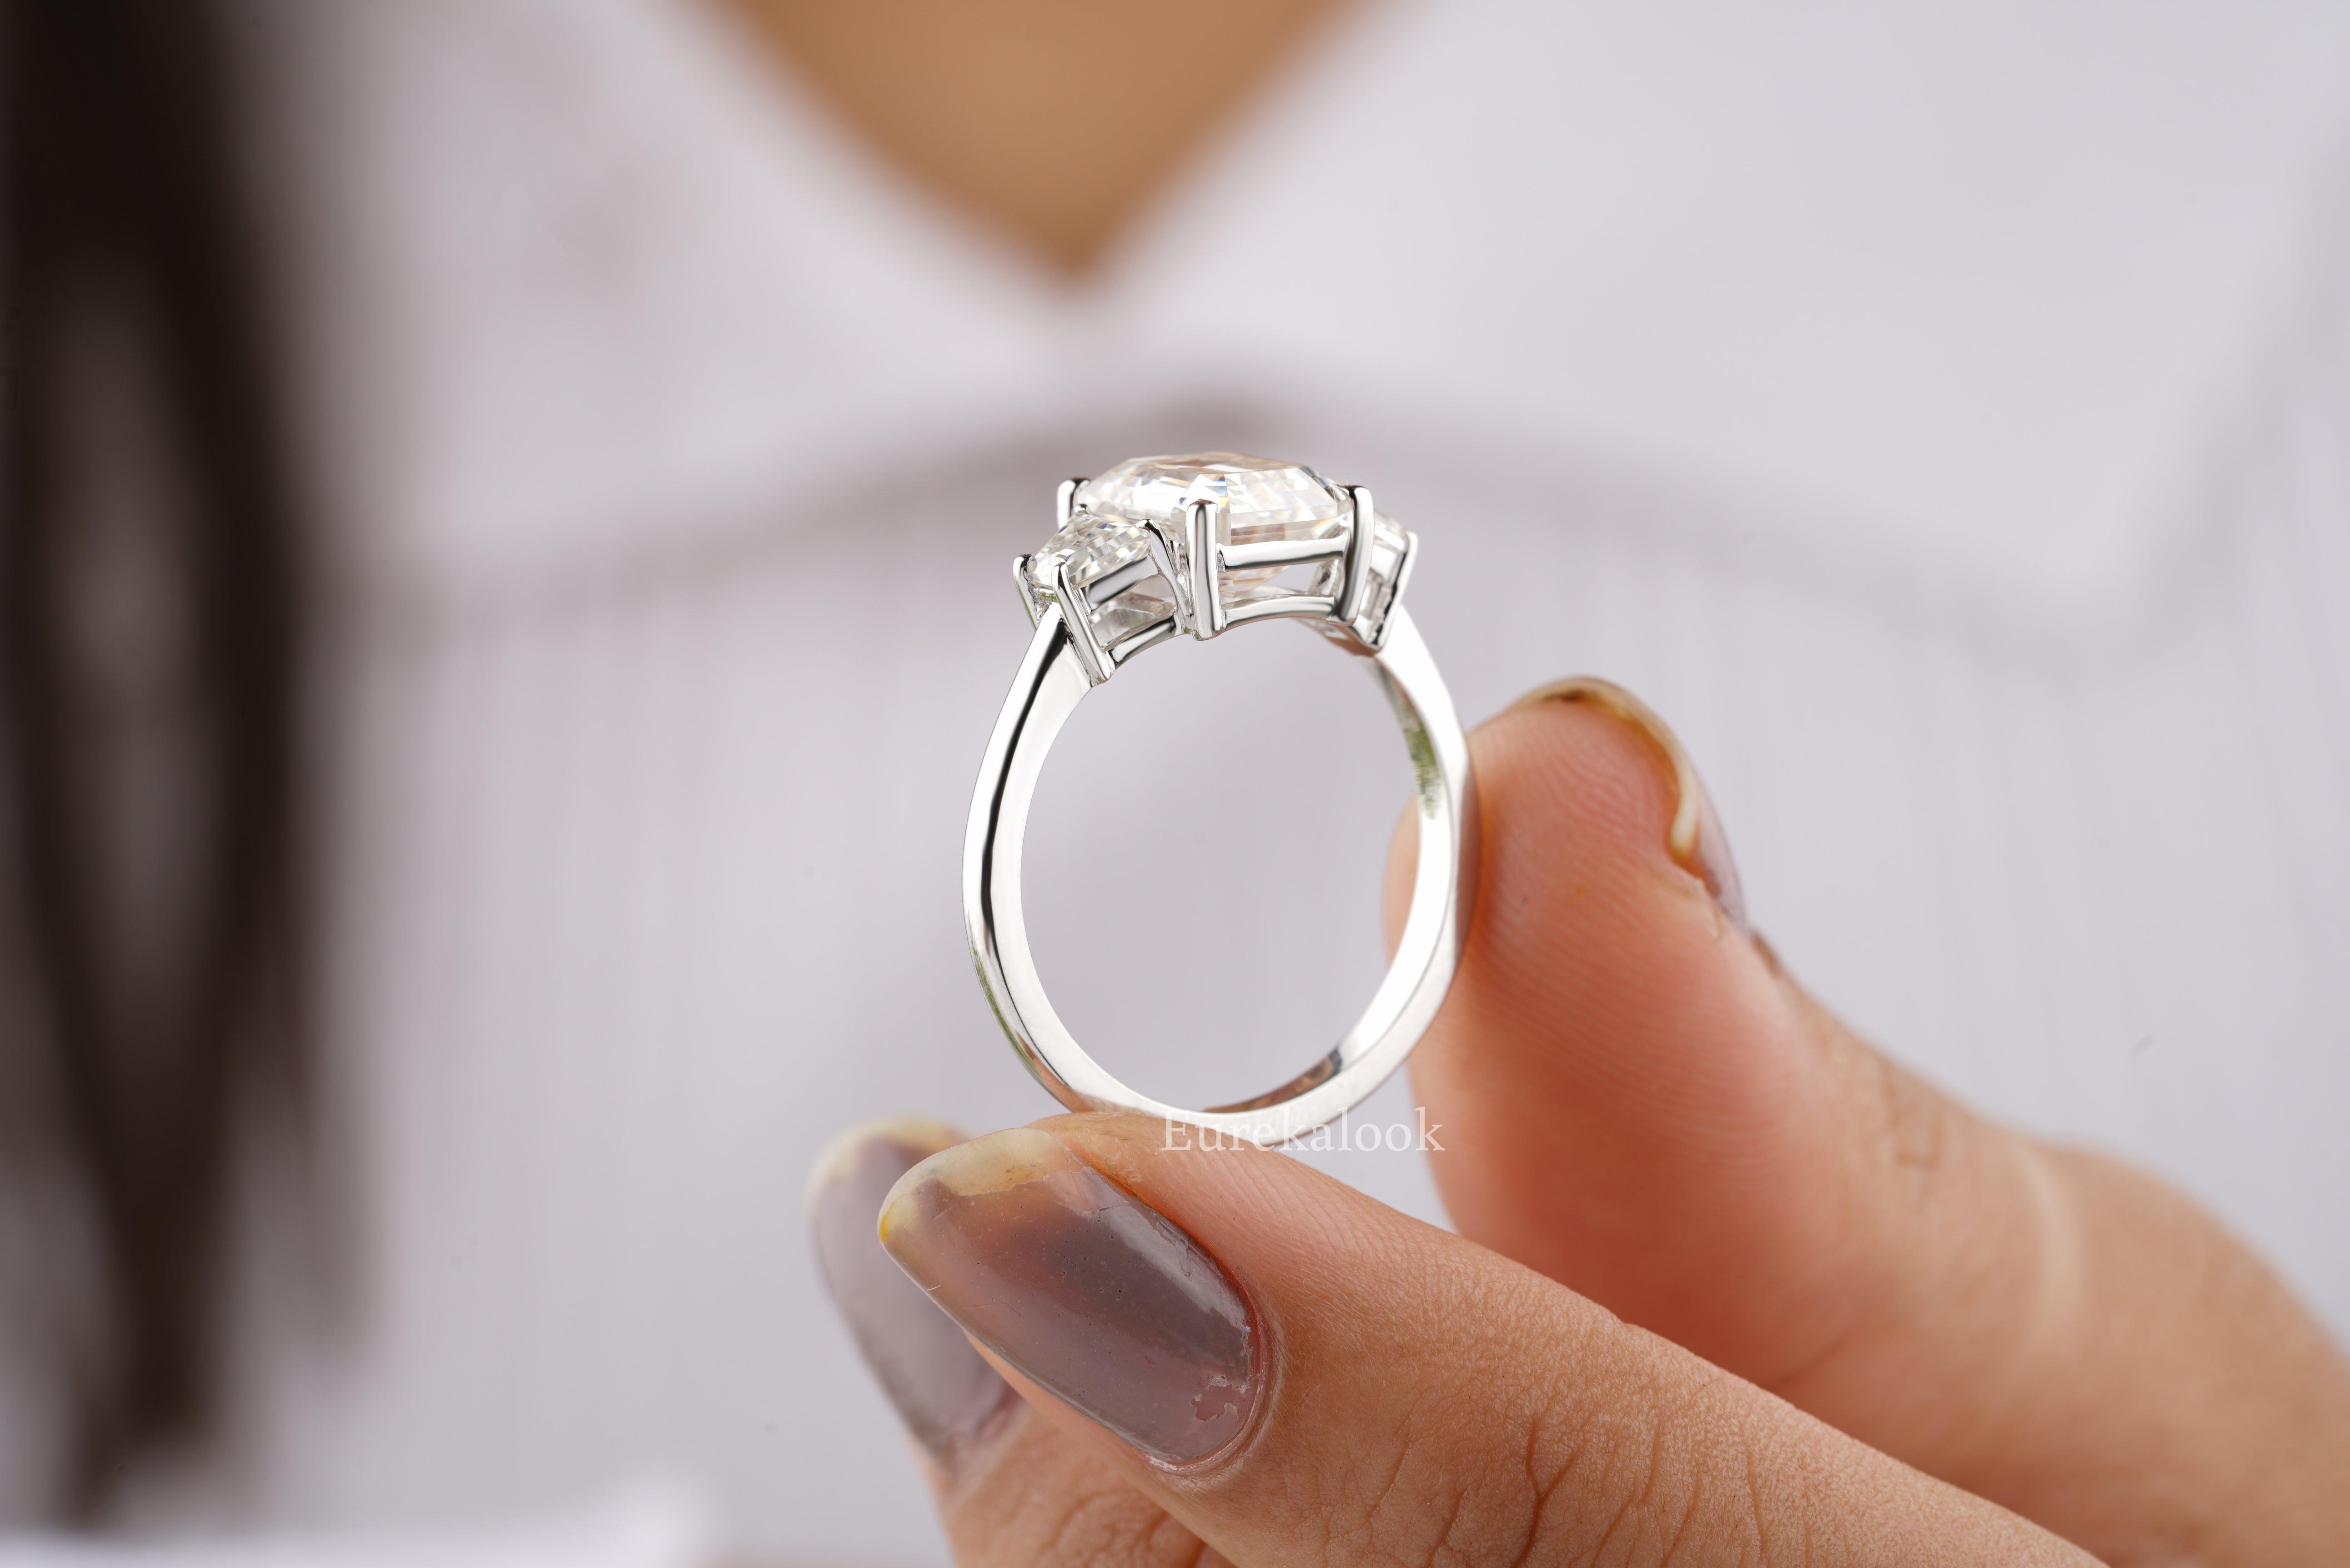 Three Stone Emerald Cut Moissanite Engagement Ring - Eurekalook